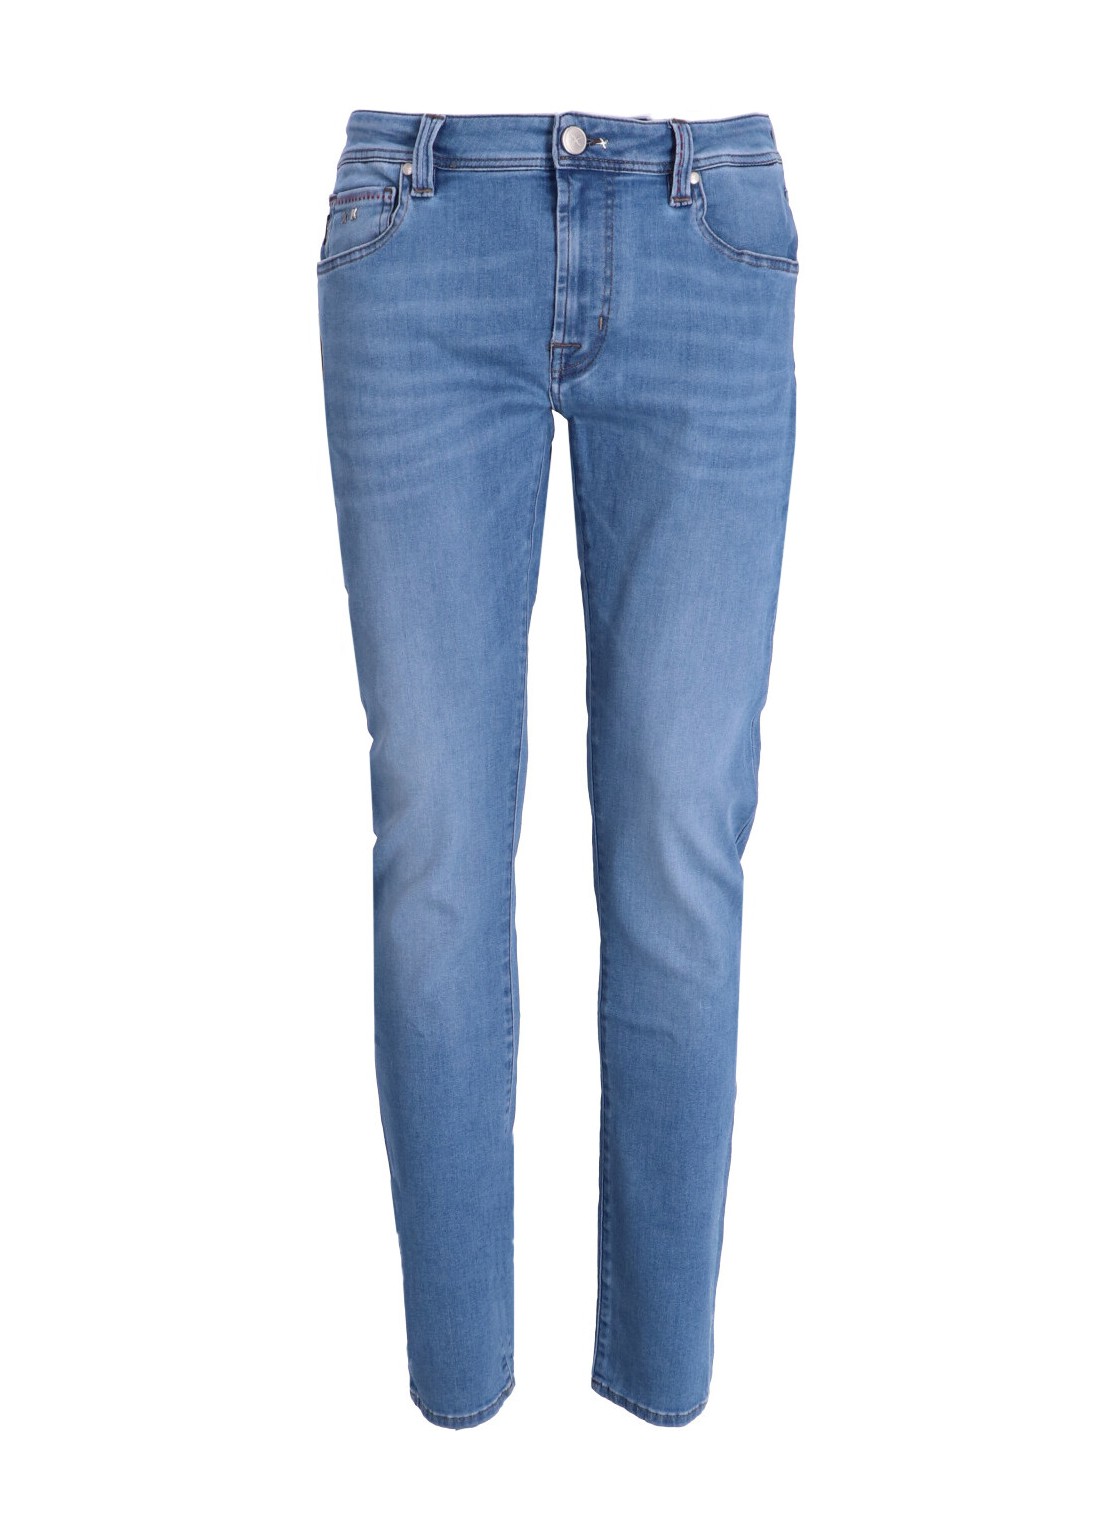 Pantalon jeans tramarossa denim man leonardo zip stre leonardo zip stre 12 month heri talla 33
 